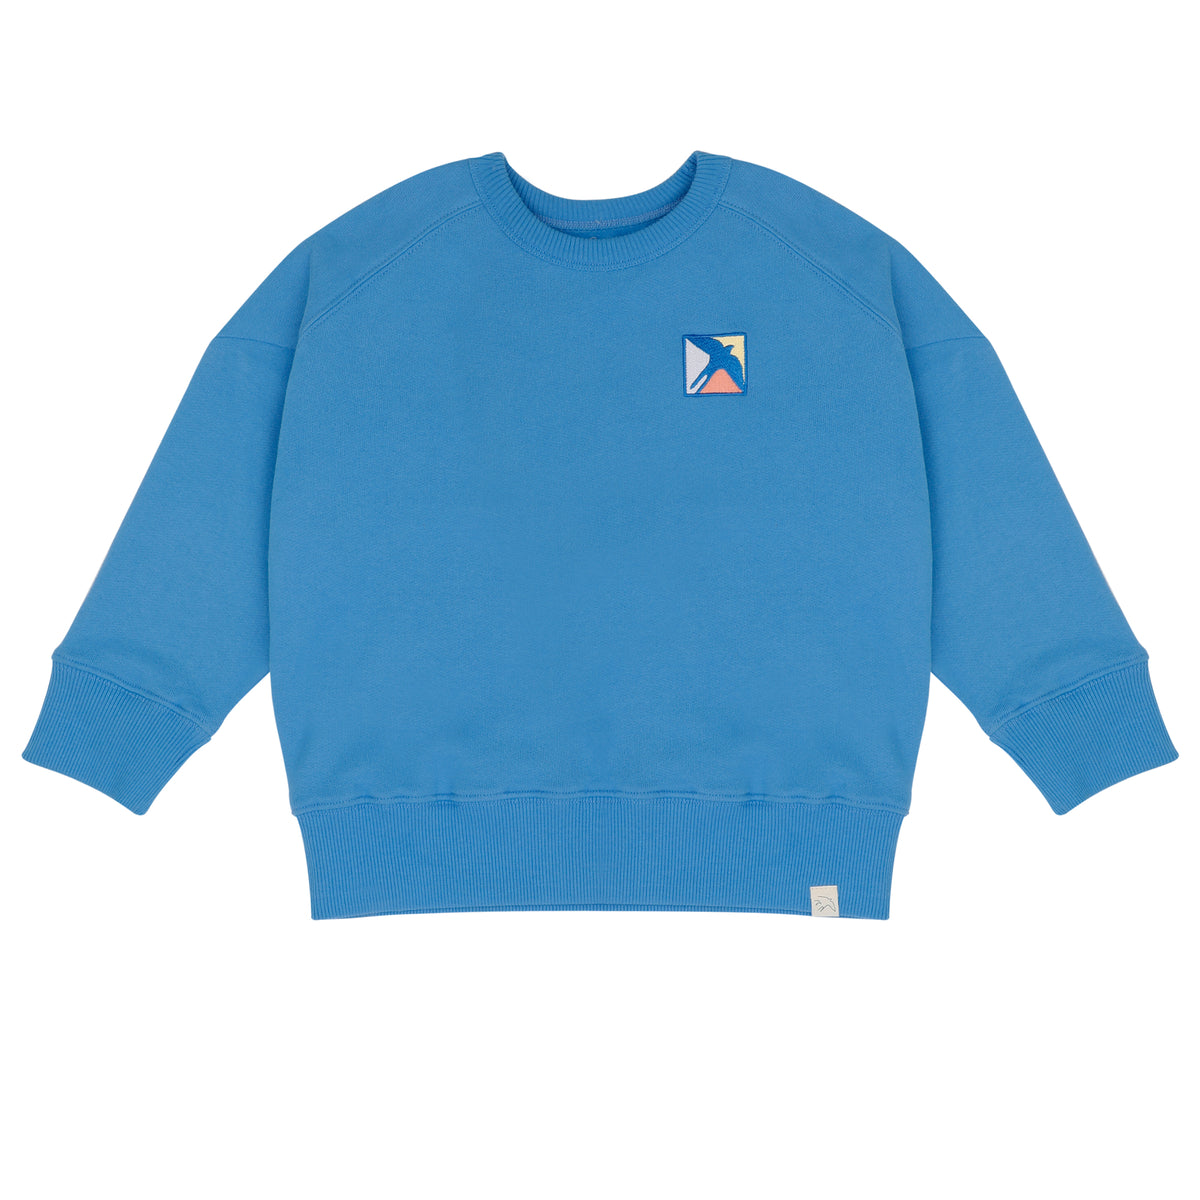 Sammy badge sweater bright blue, Jenest